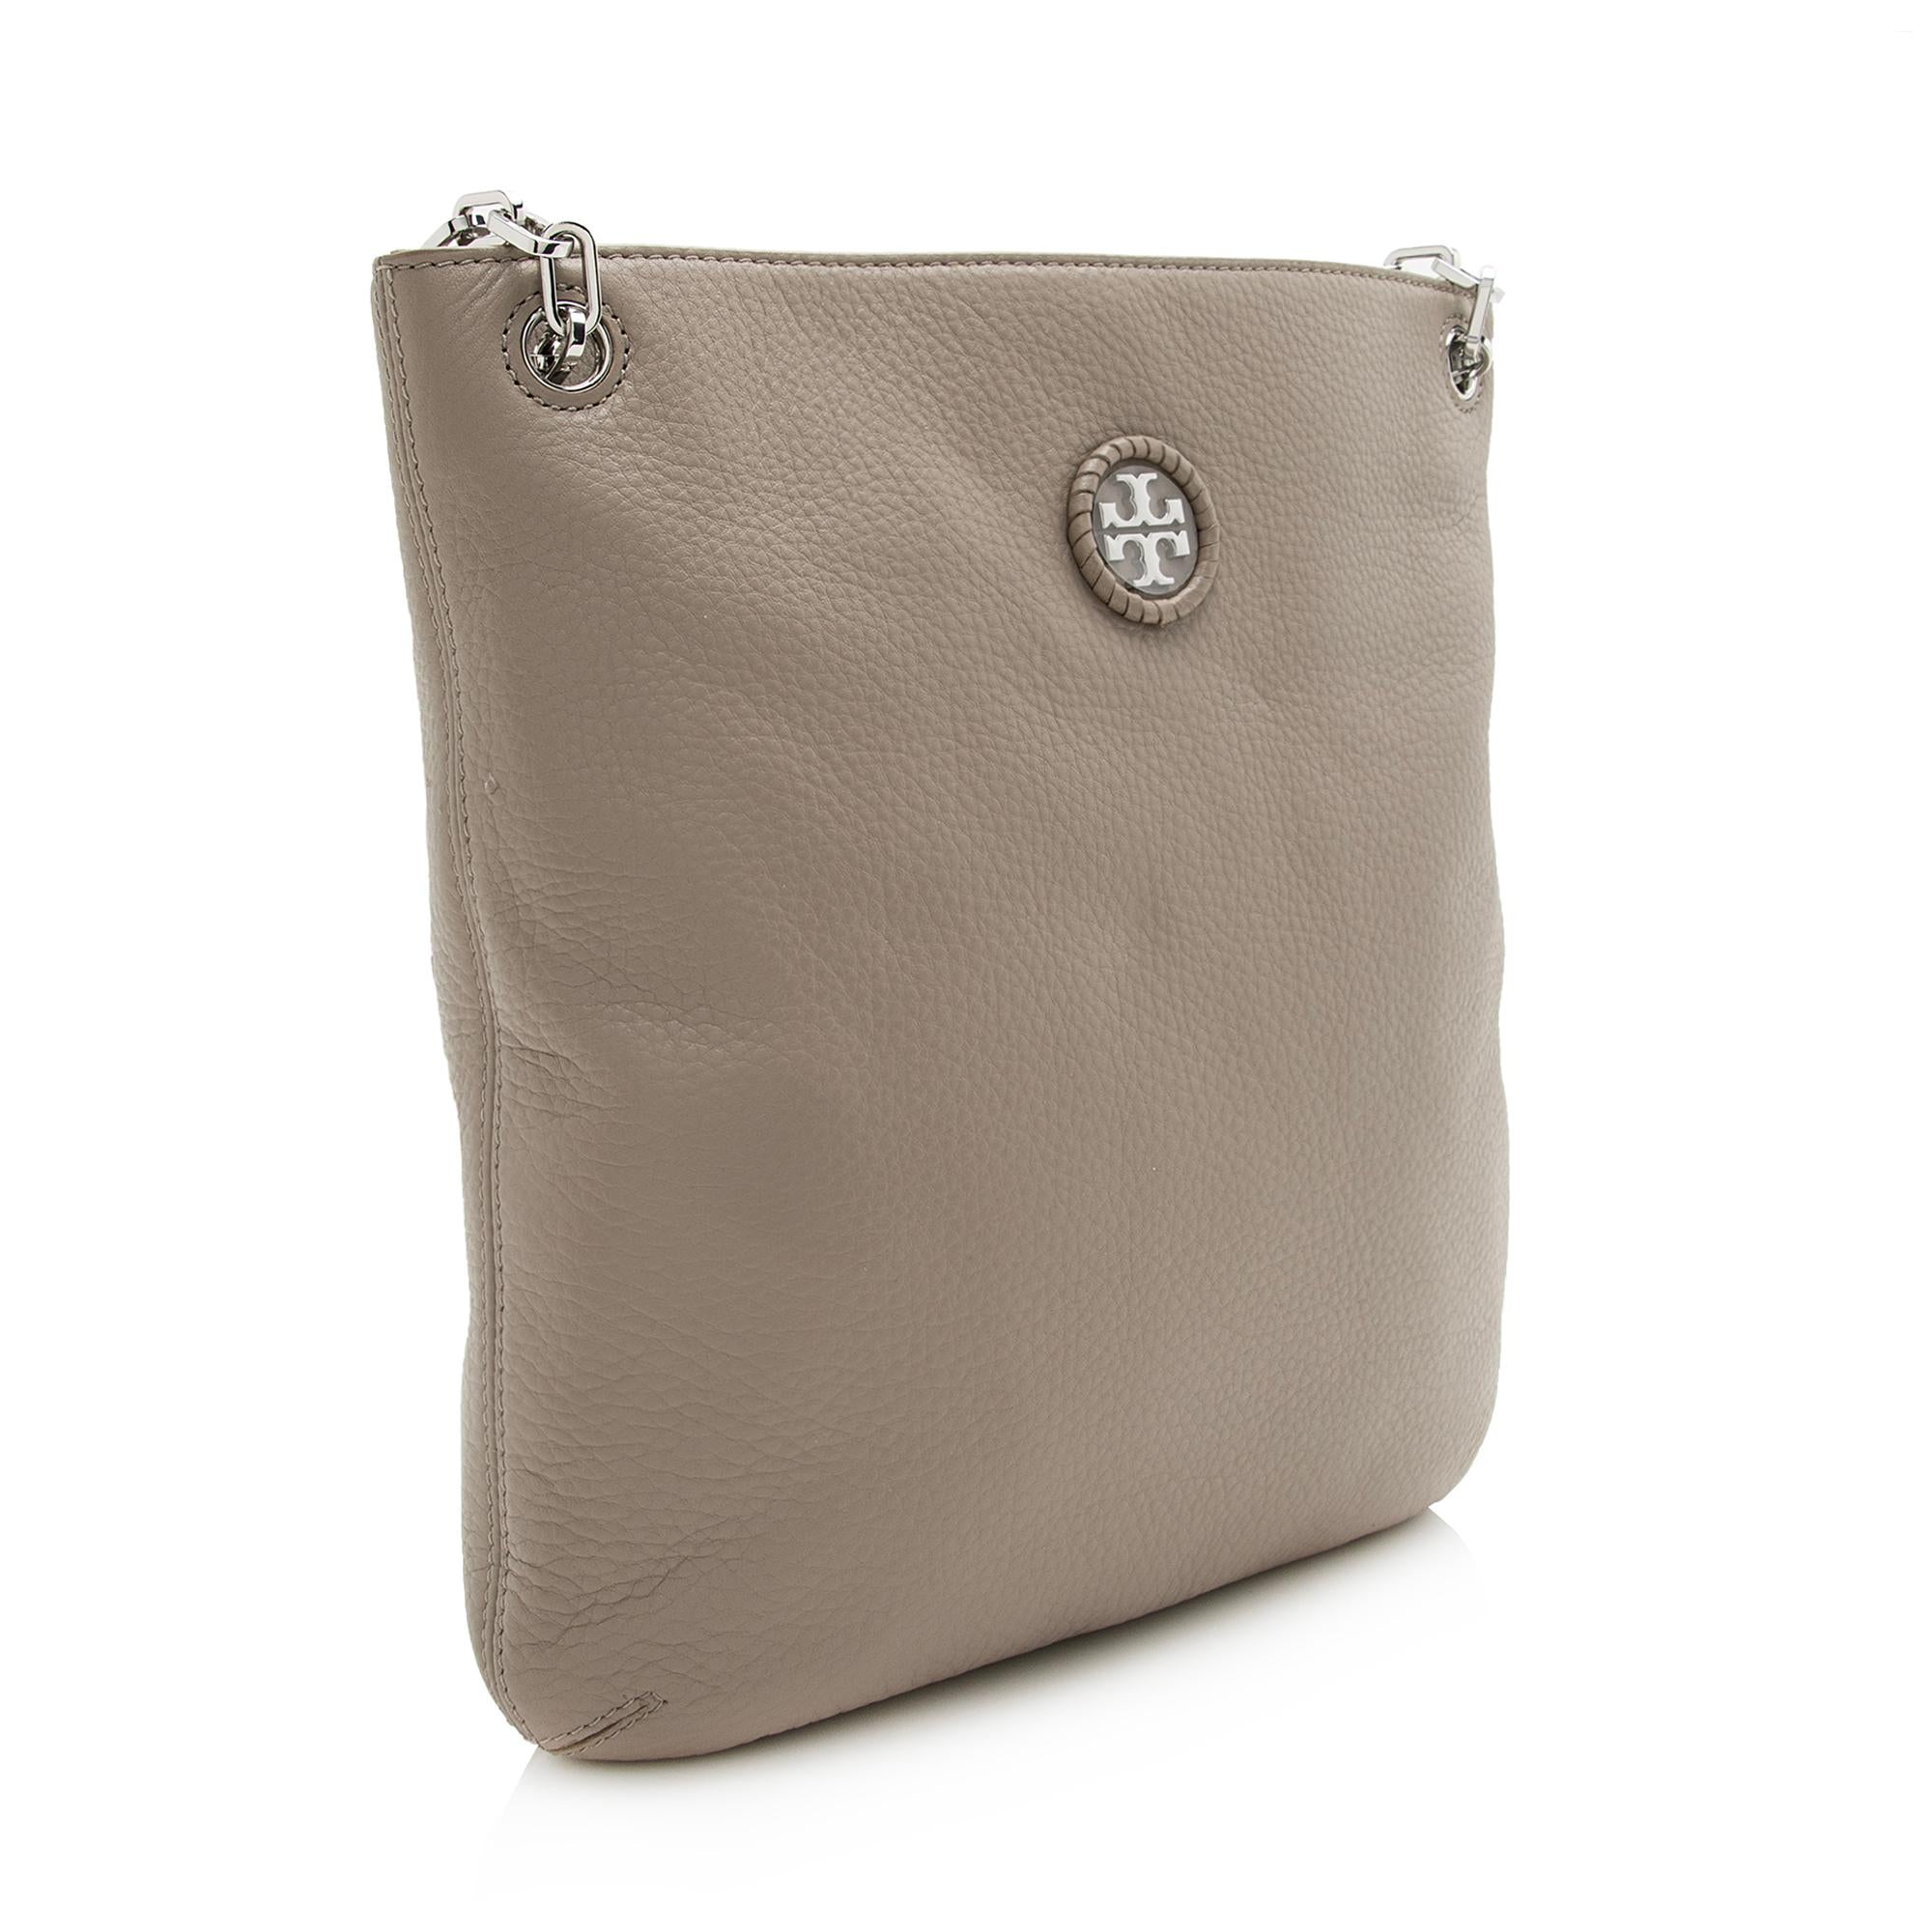 Tory Burch Pebbled Leather Convertible Swingpack Shoulder Bag